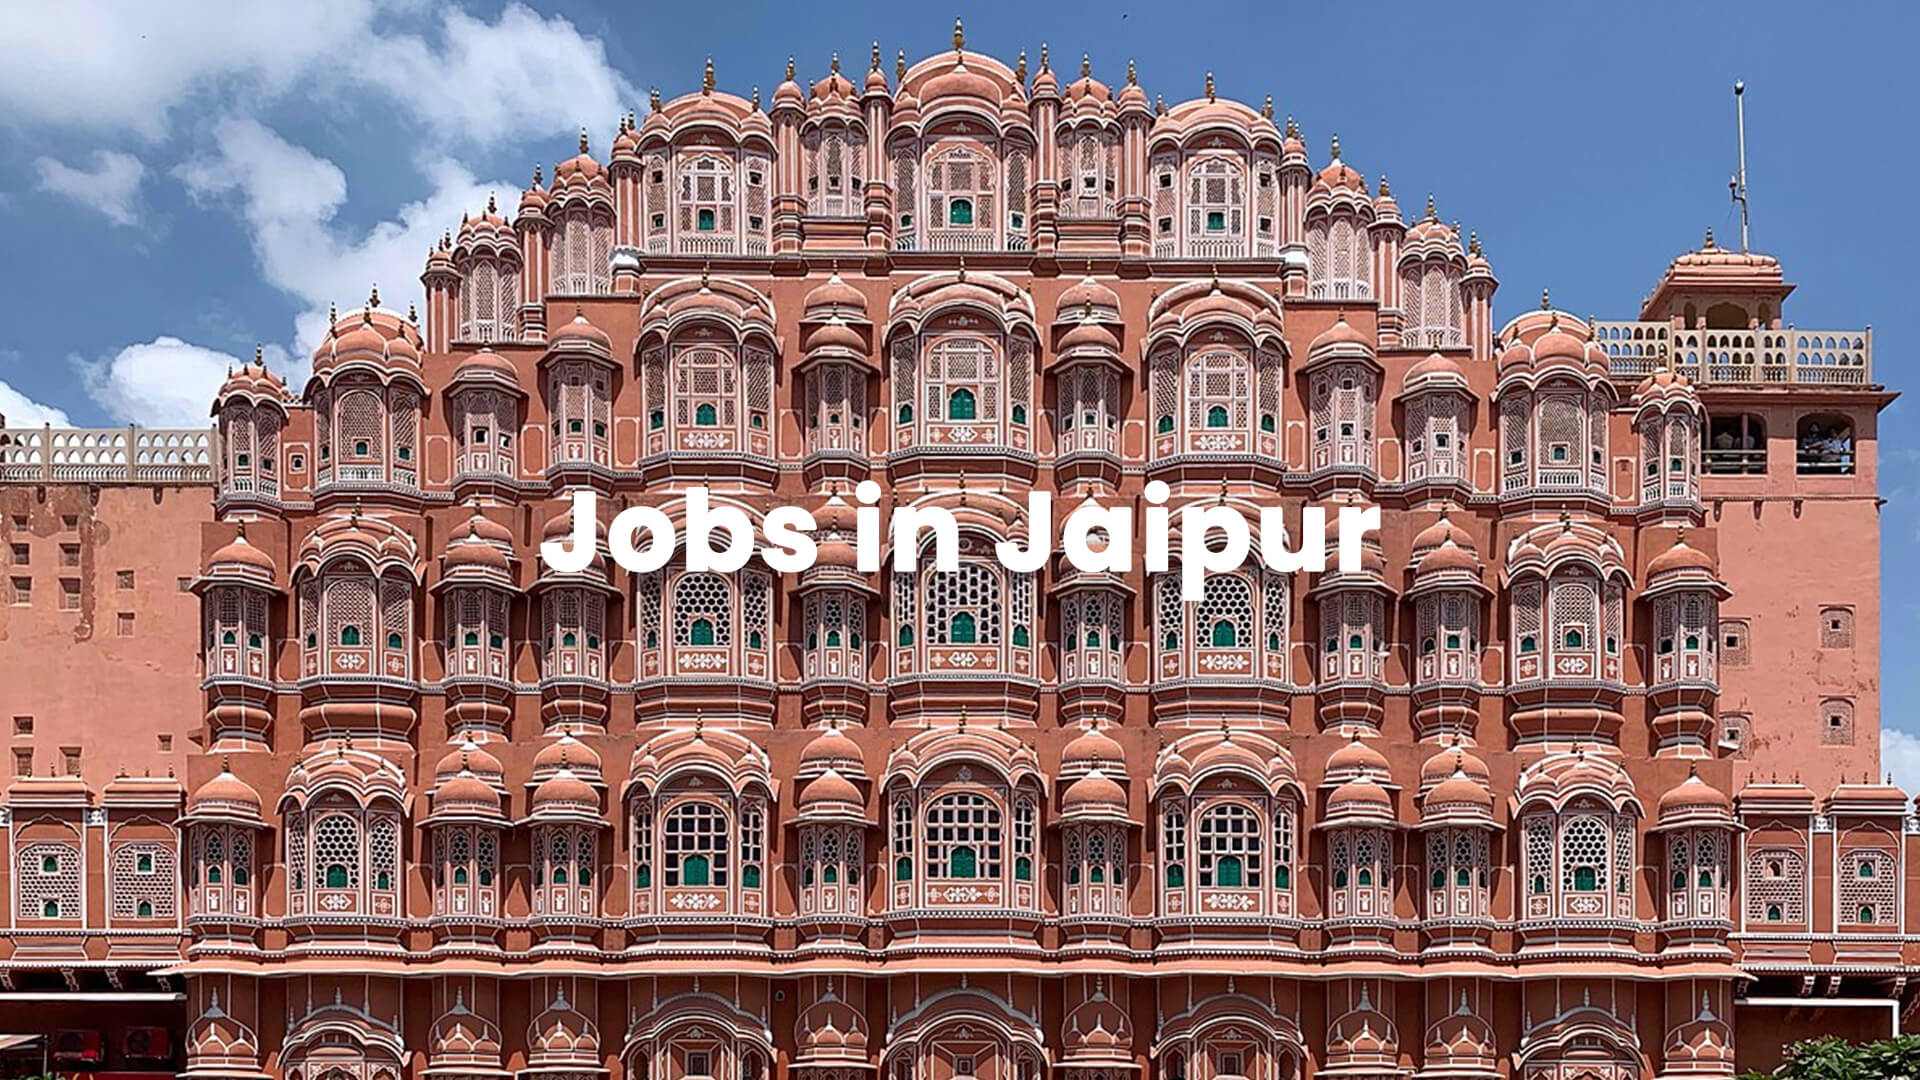 Jobs in Jaipur